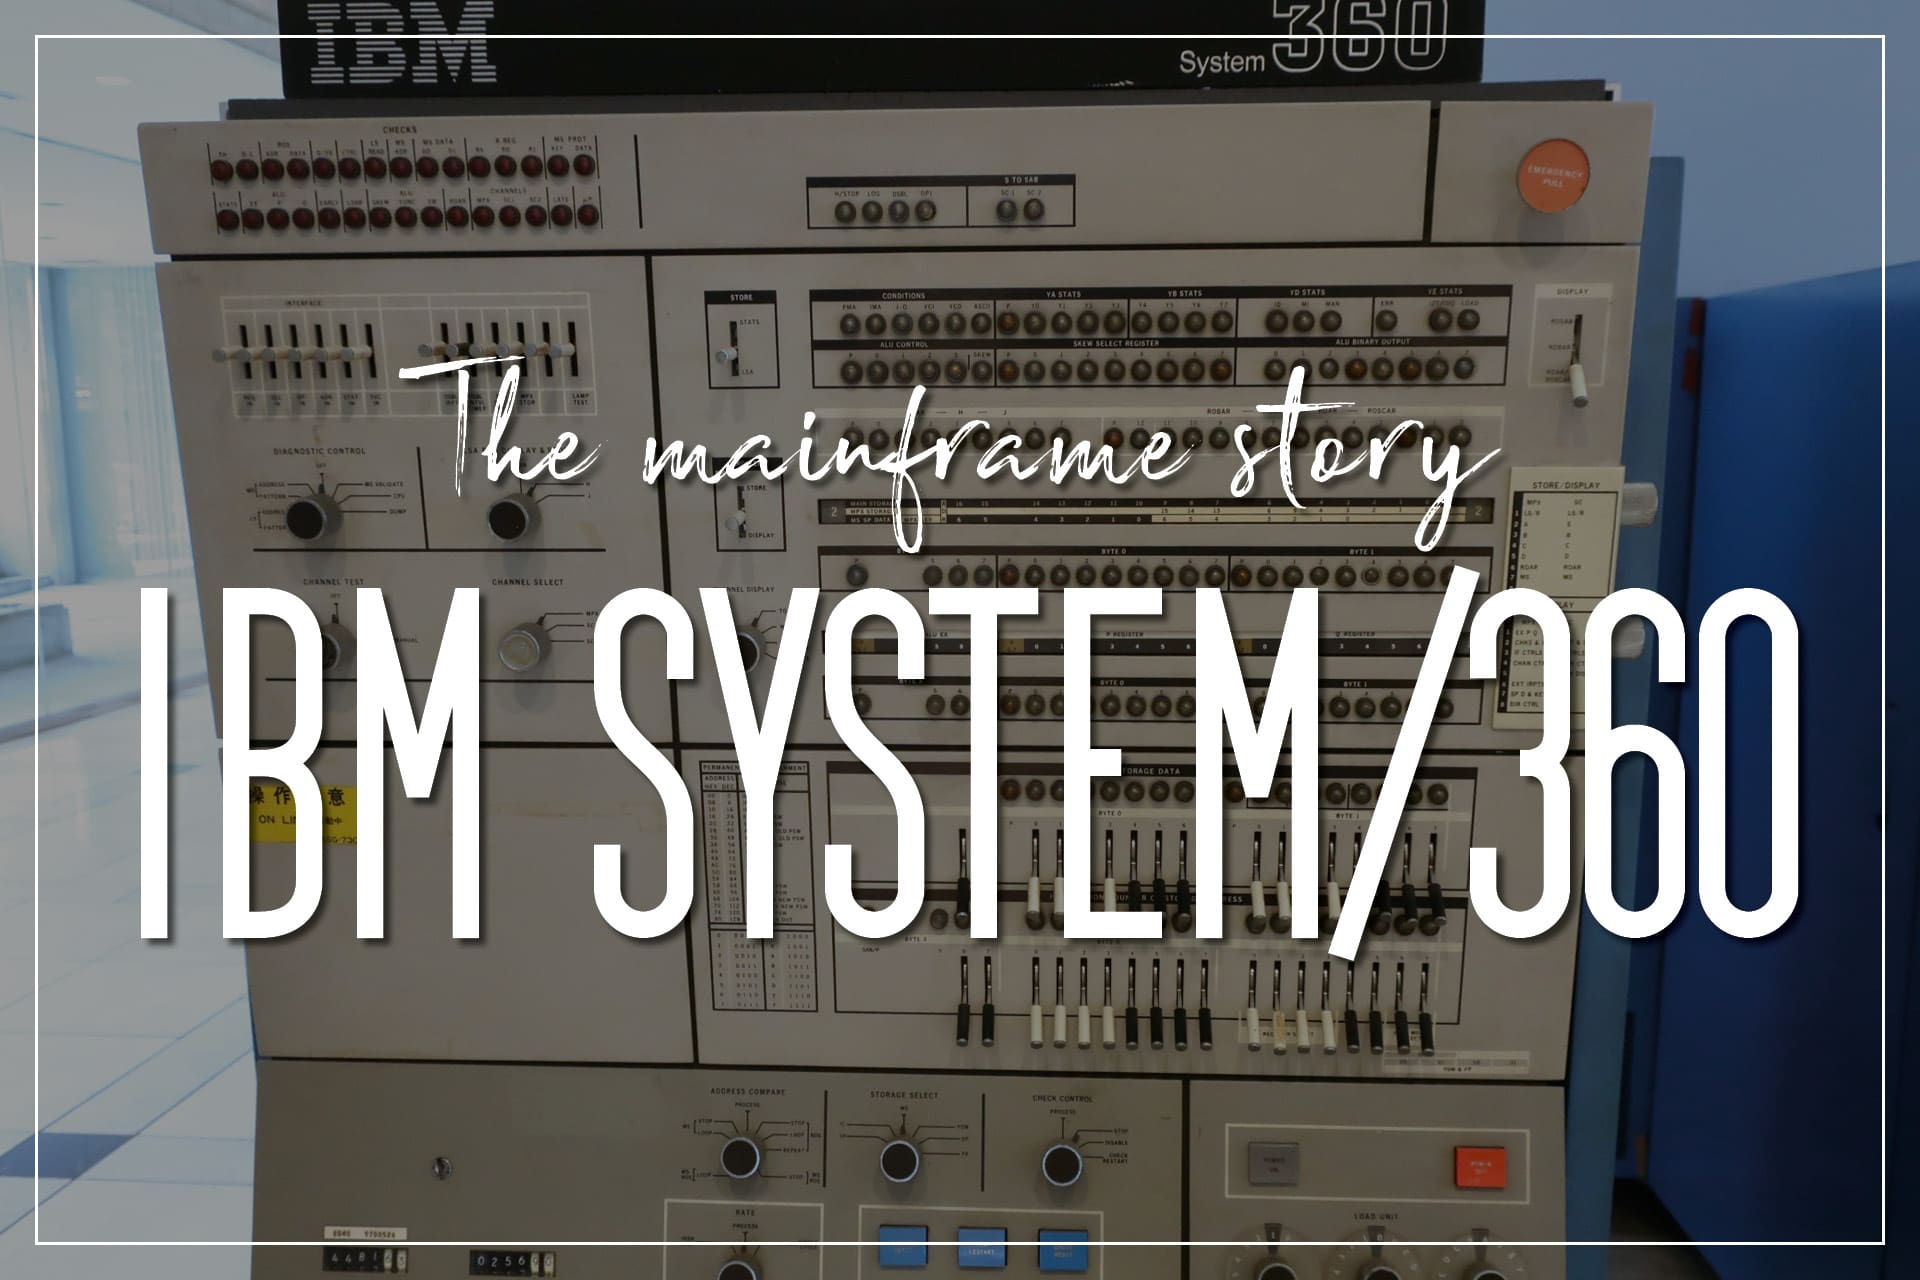 IBM System/360 History: A Revolutionary Mainframe Story